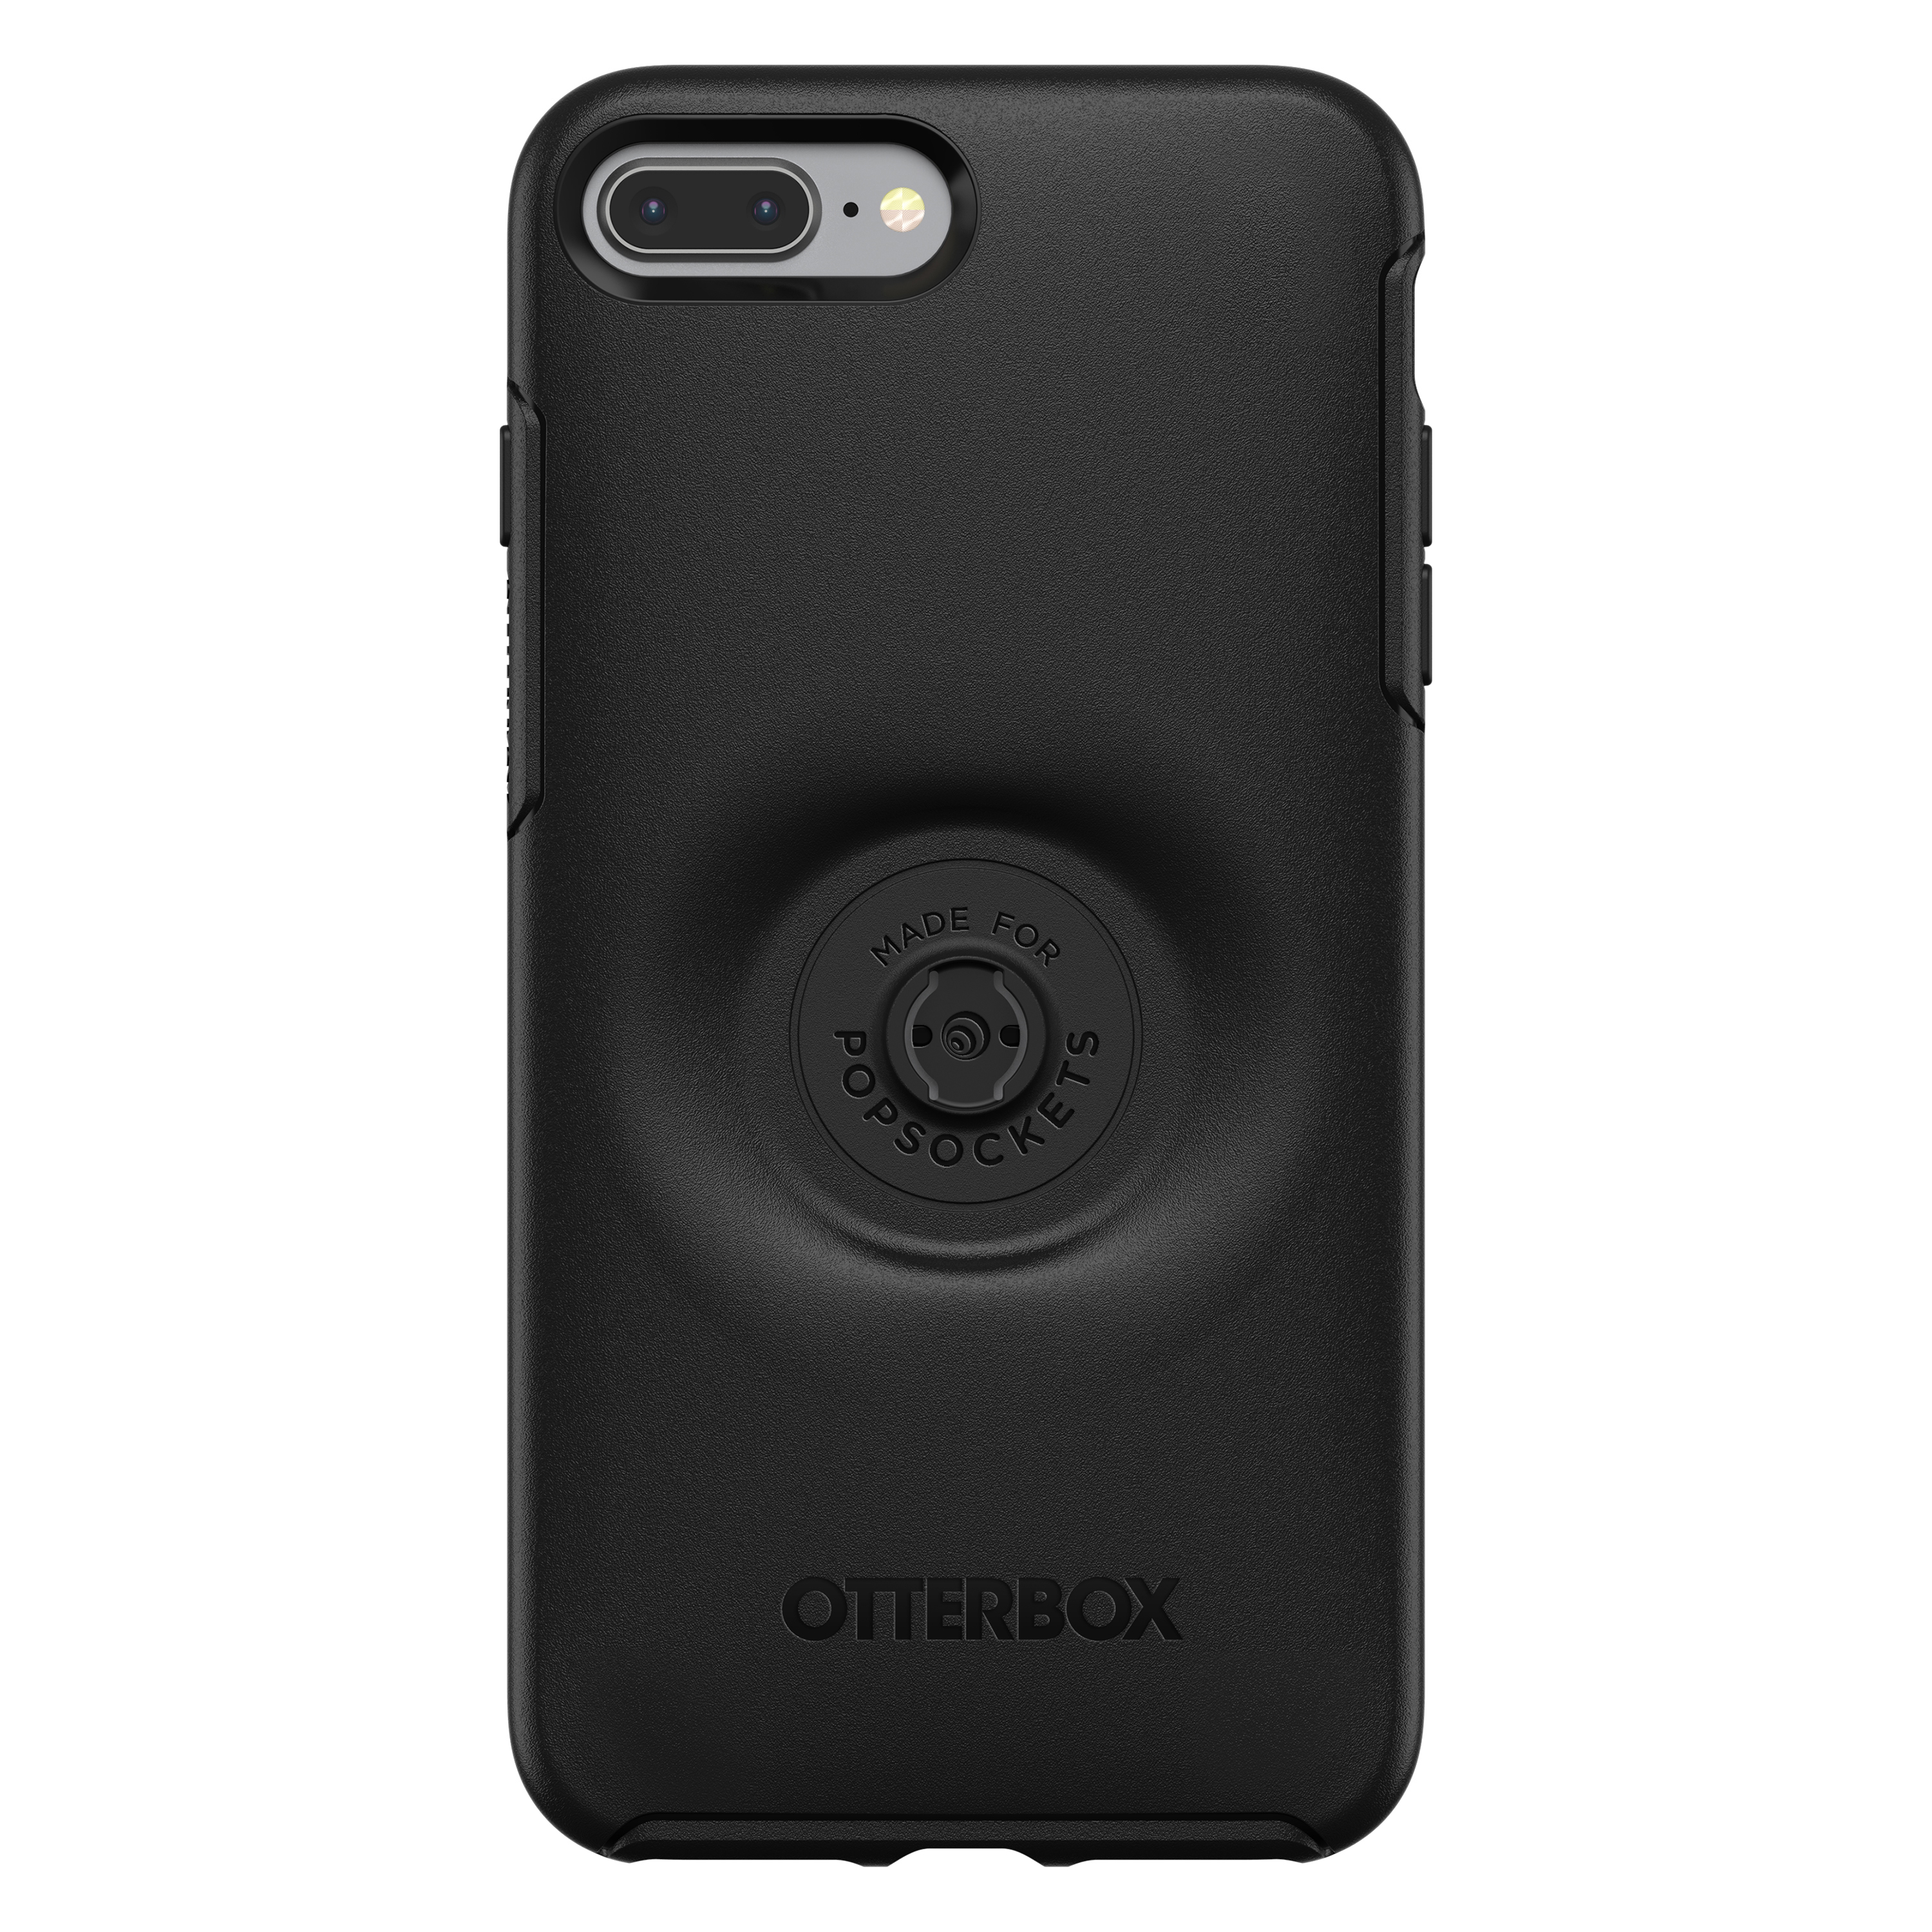 OTTERBOX Otter Plus, 8 7 iPhone + Apple, Plus, iPhone Pop Backcover, Symmetry, Schwarz